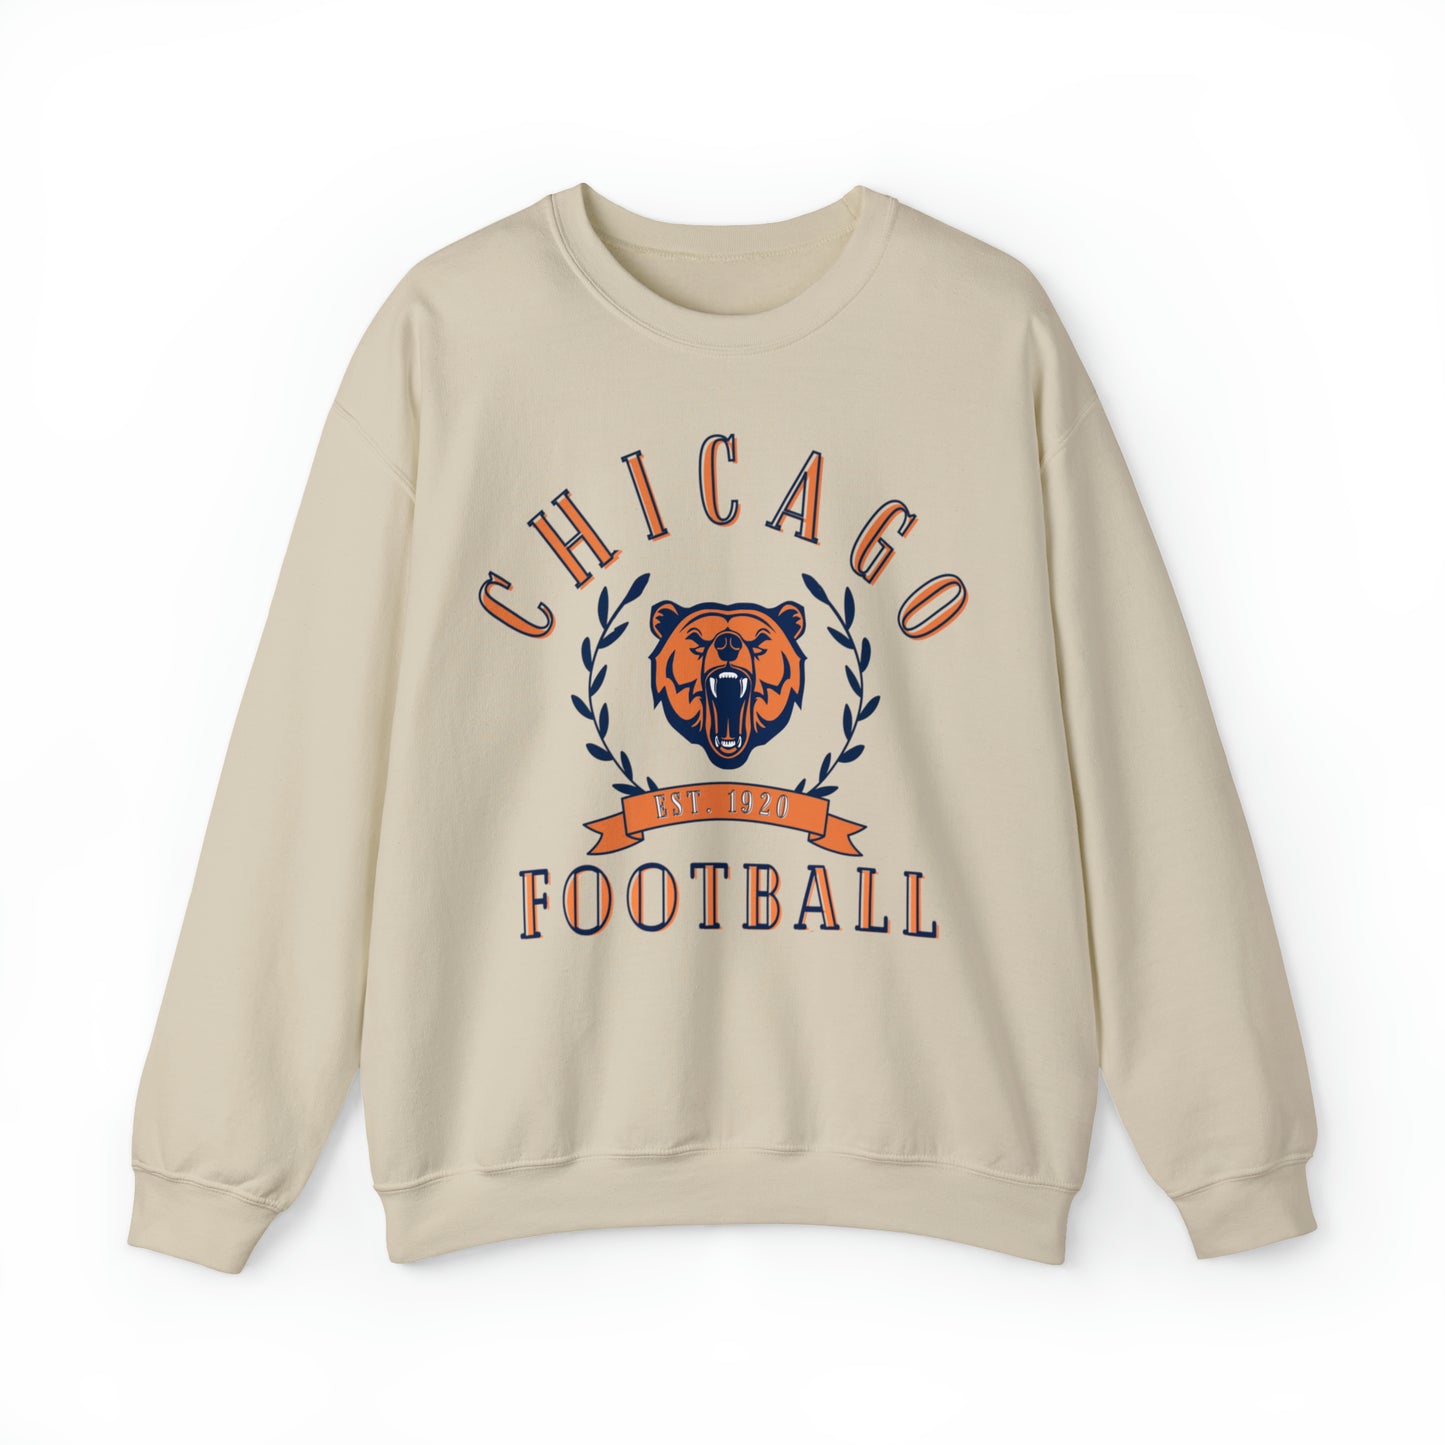 Chicago Bears Crewneck Sweatshirt - Vintage NFL Football Unisex Men's Women's Apparel - Design 3